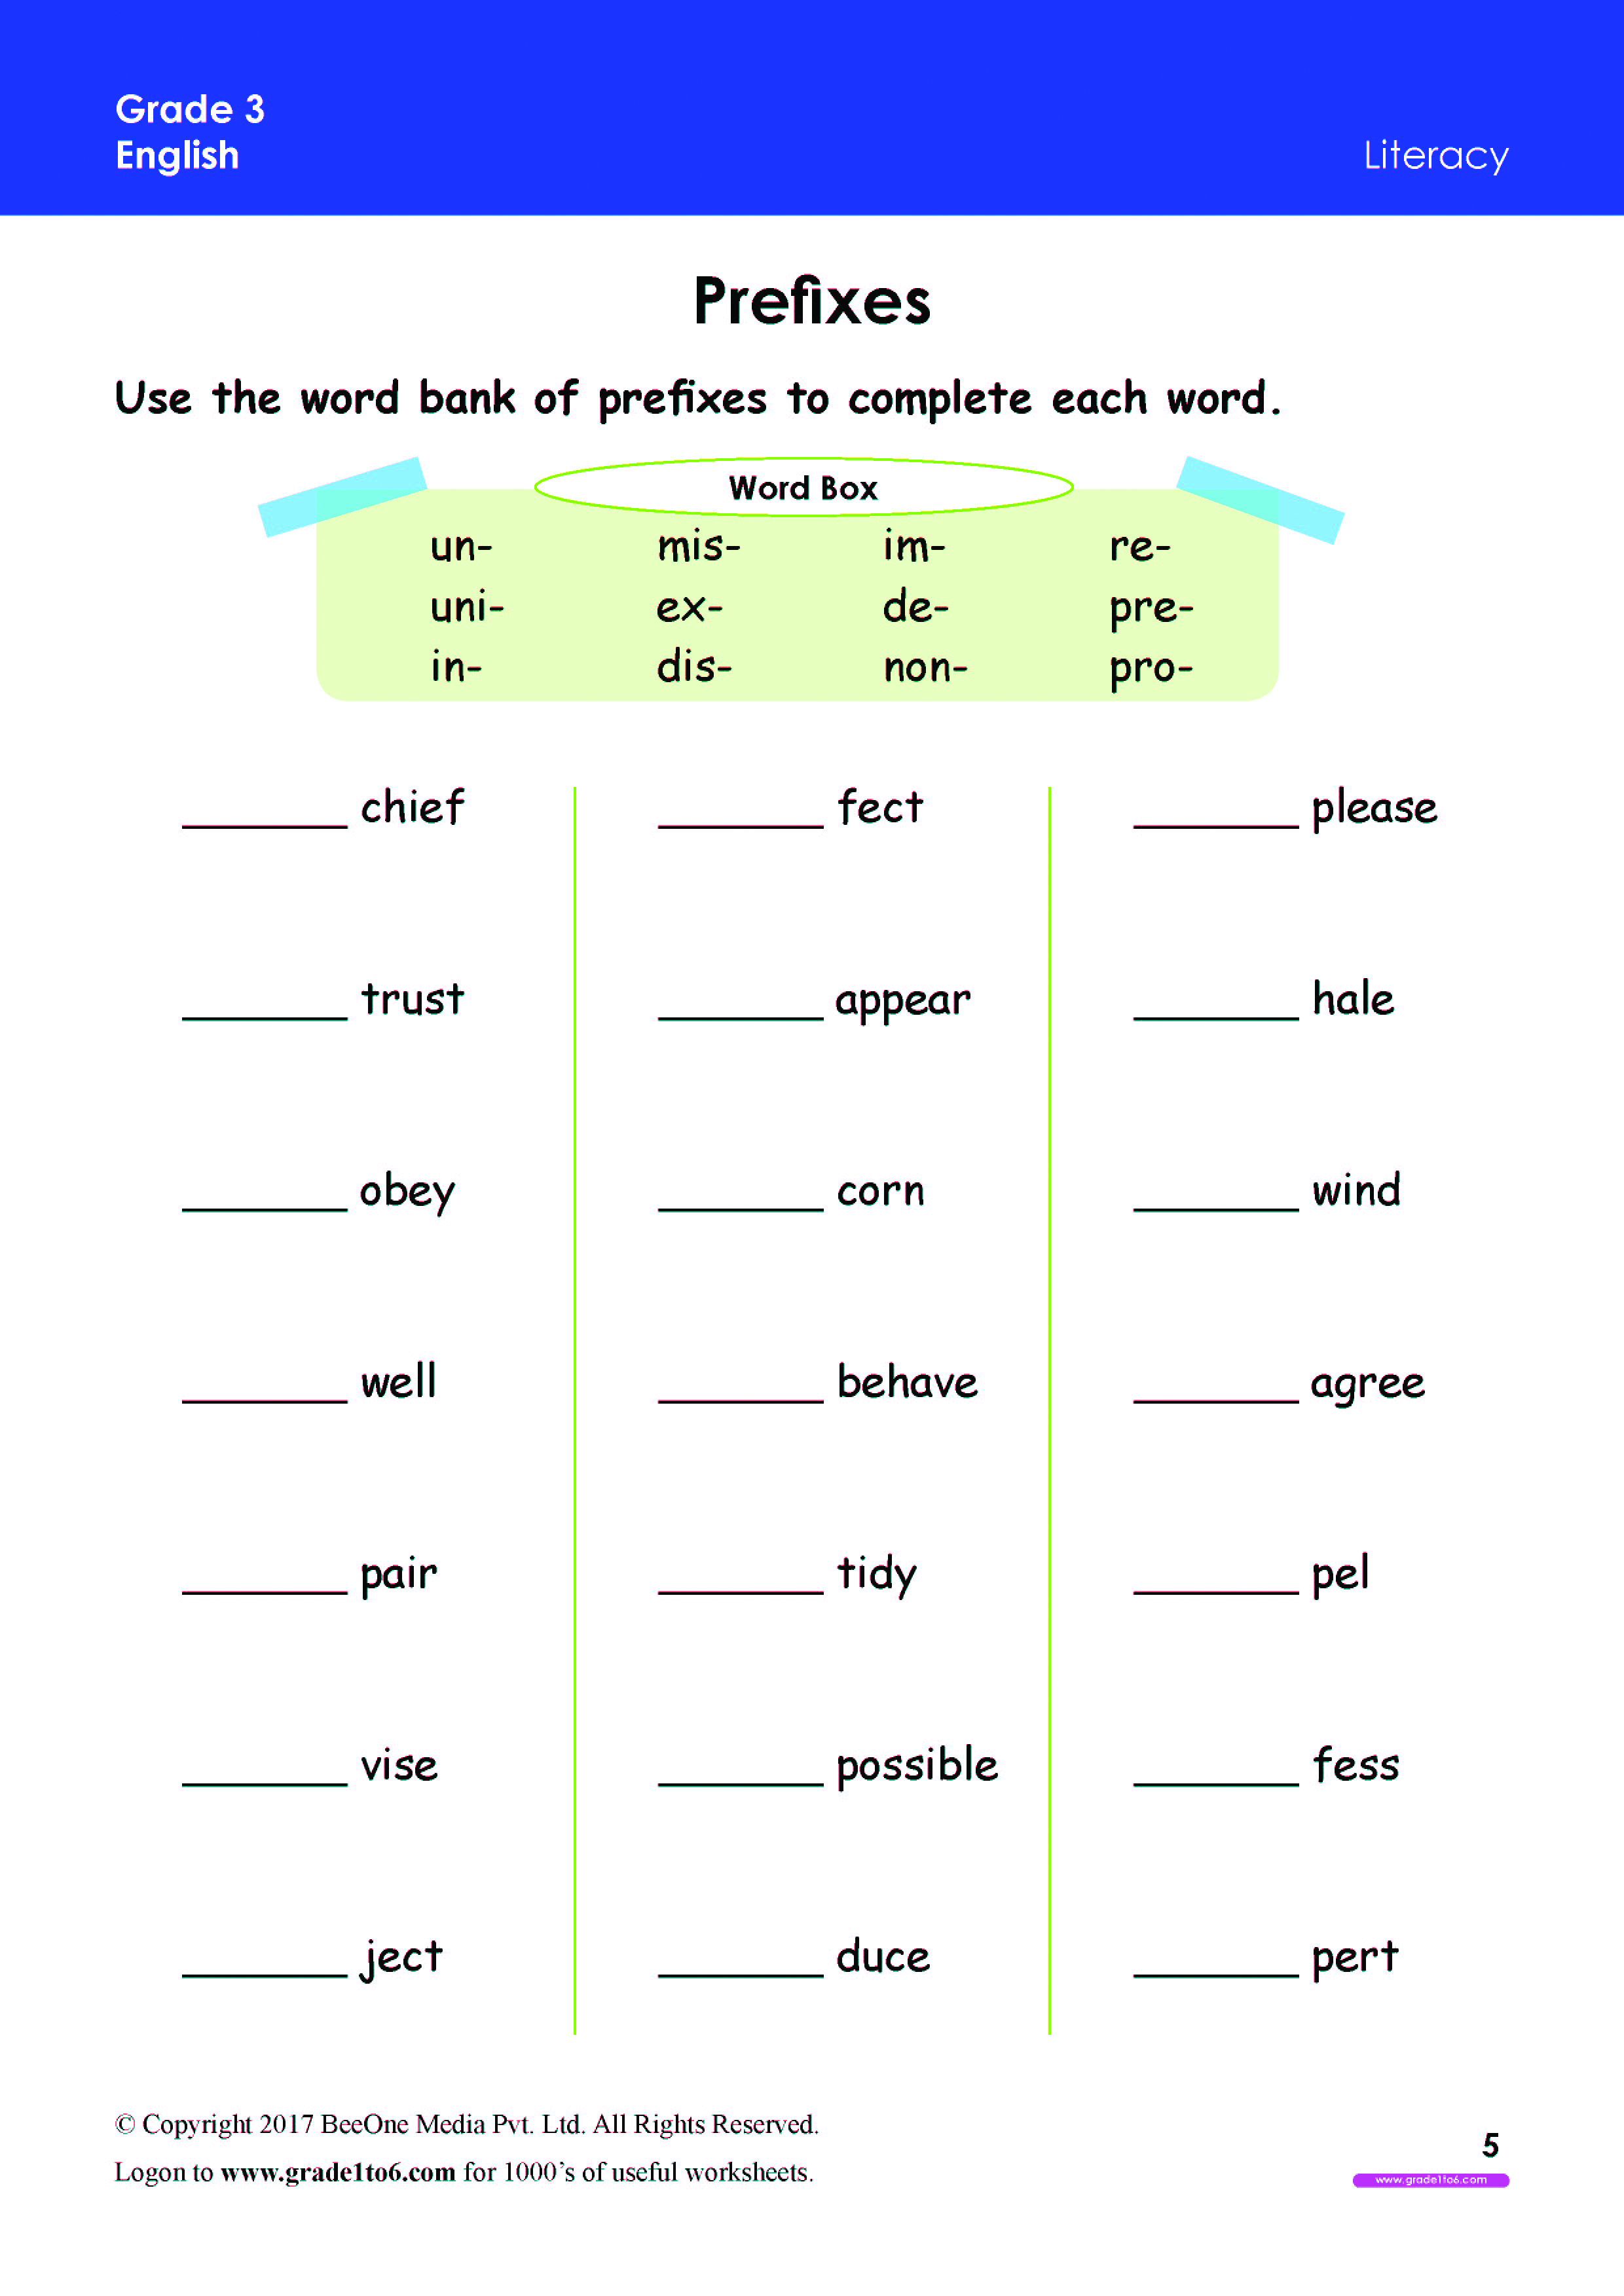 prefix worksheets grade 3wwwgrade1to6com